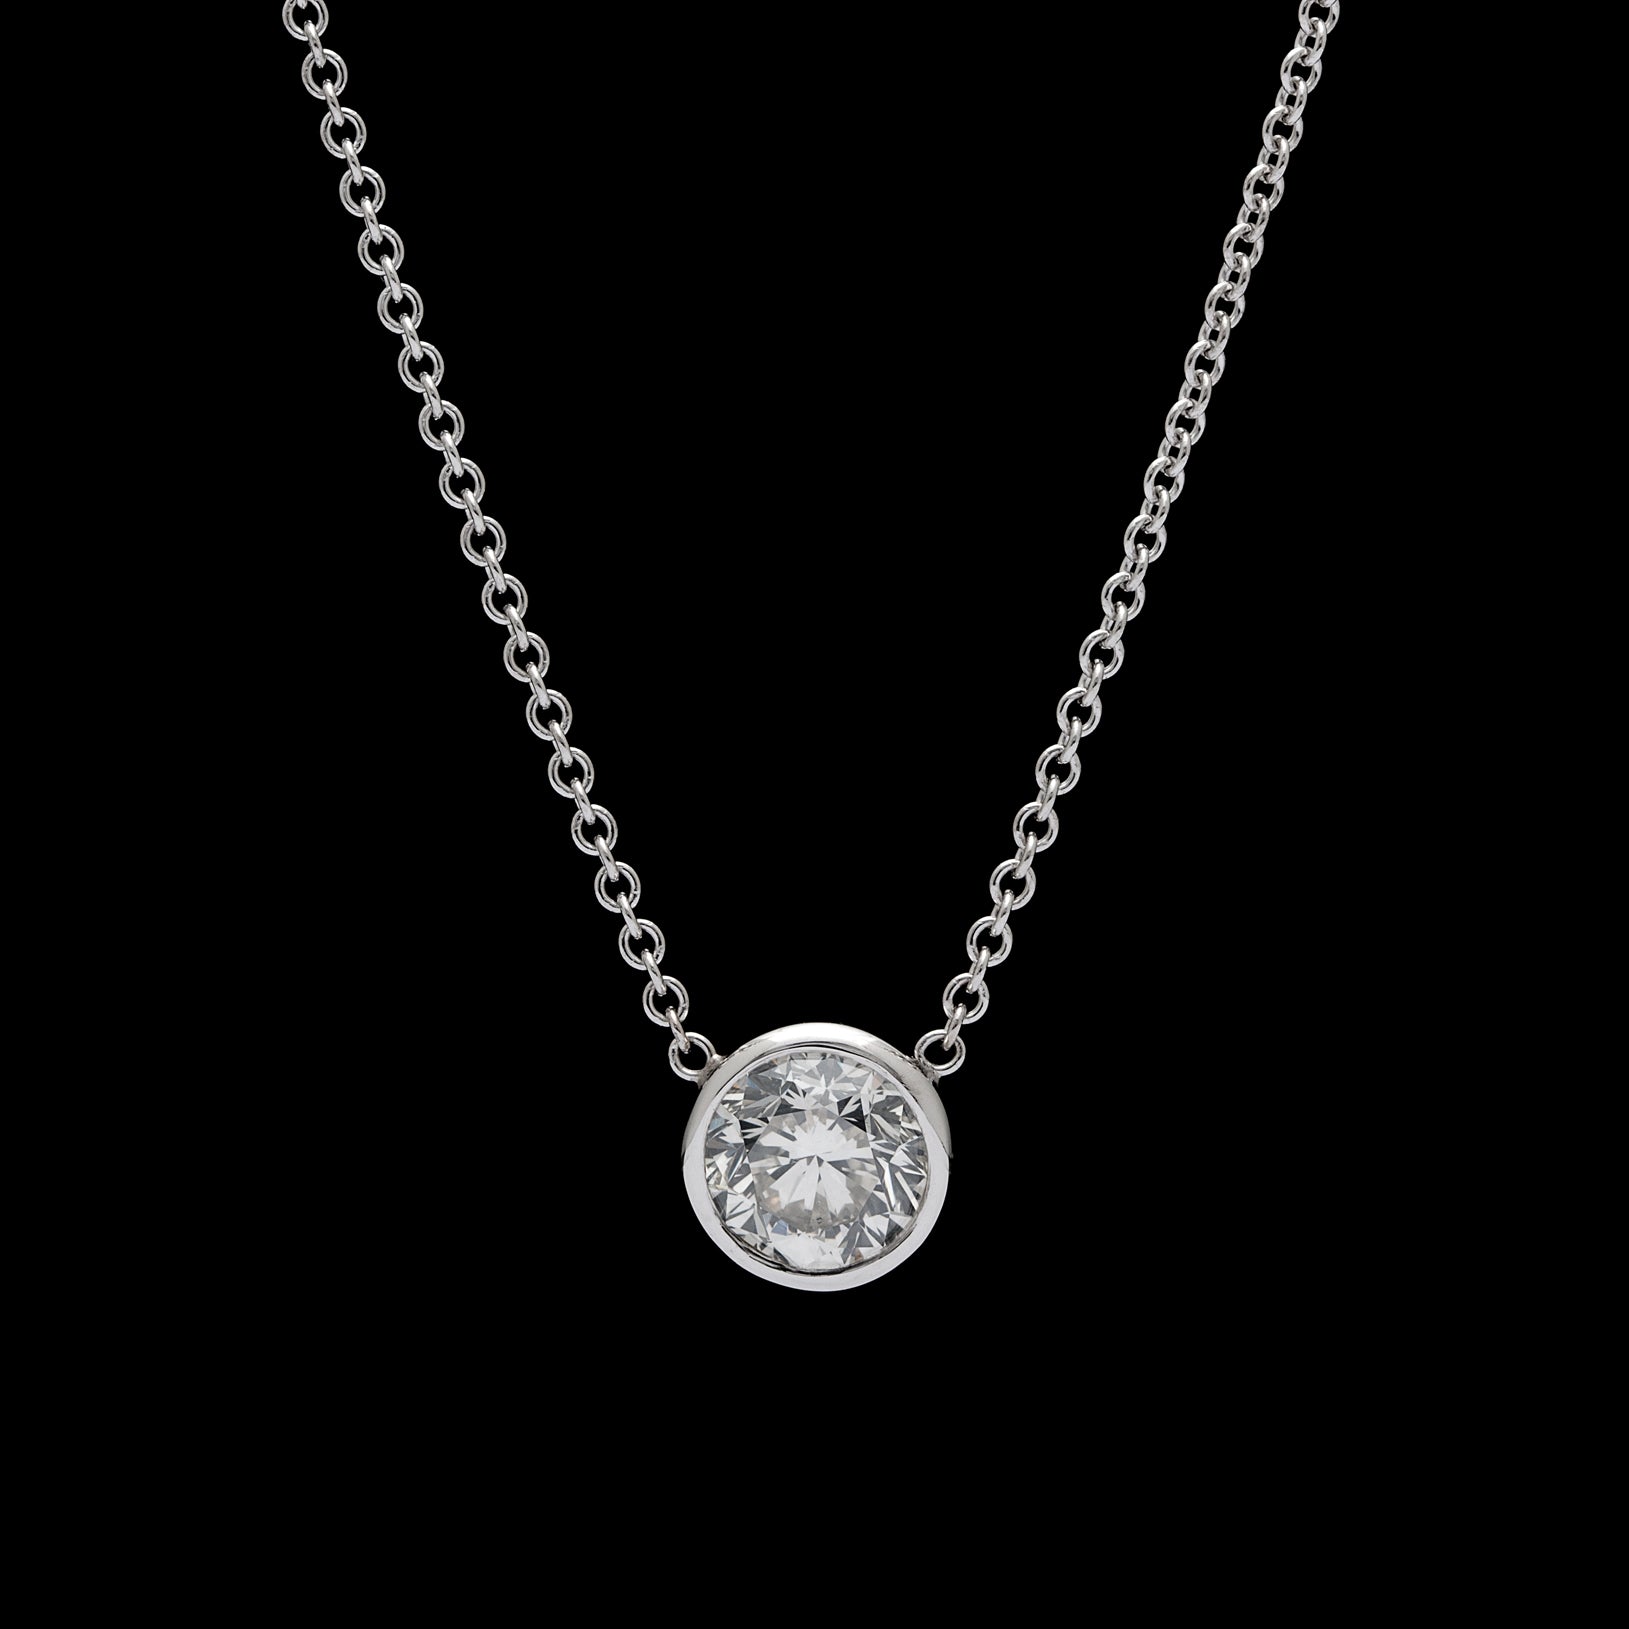 Empreinte pendant, white gold and diamonds - Categories Q93127